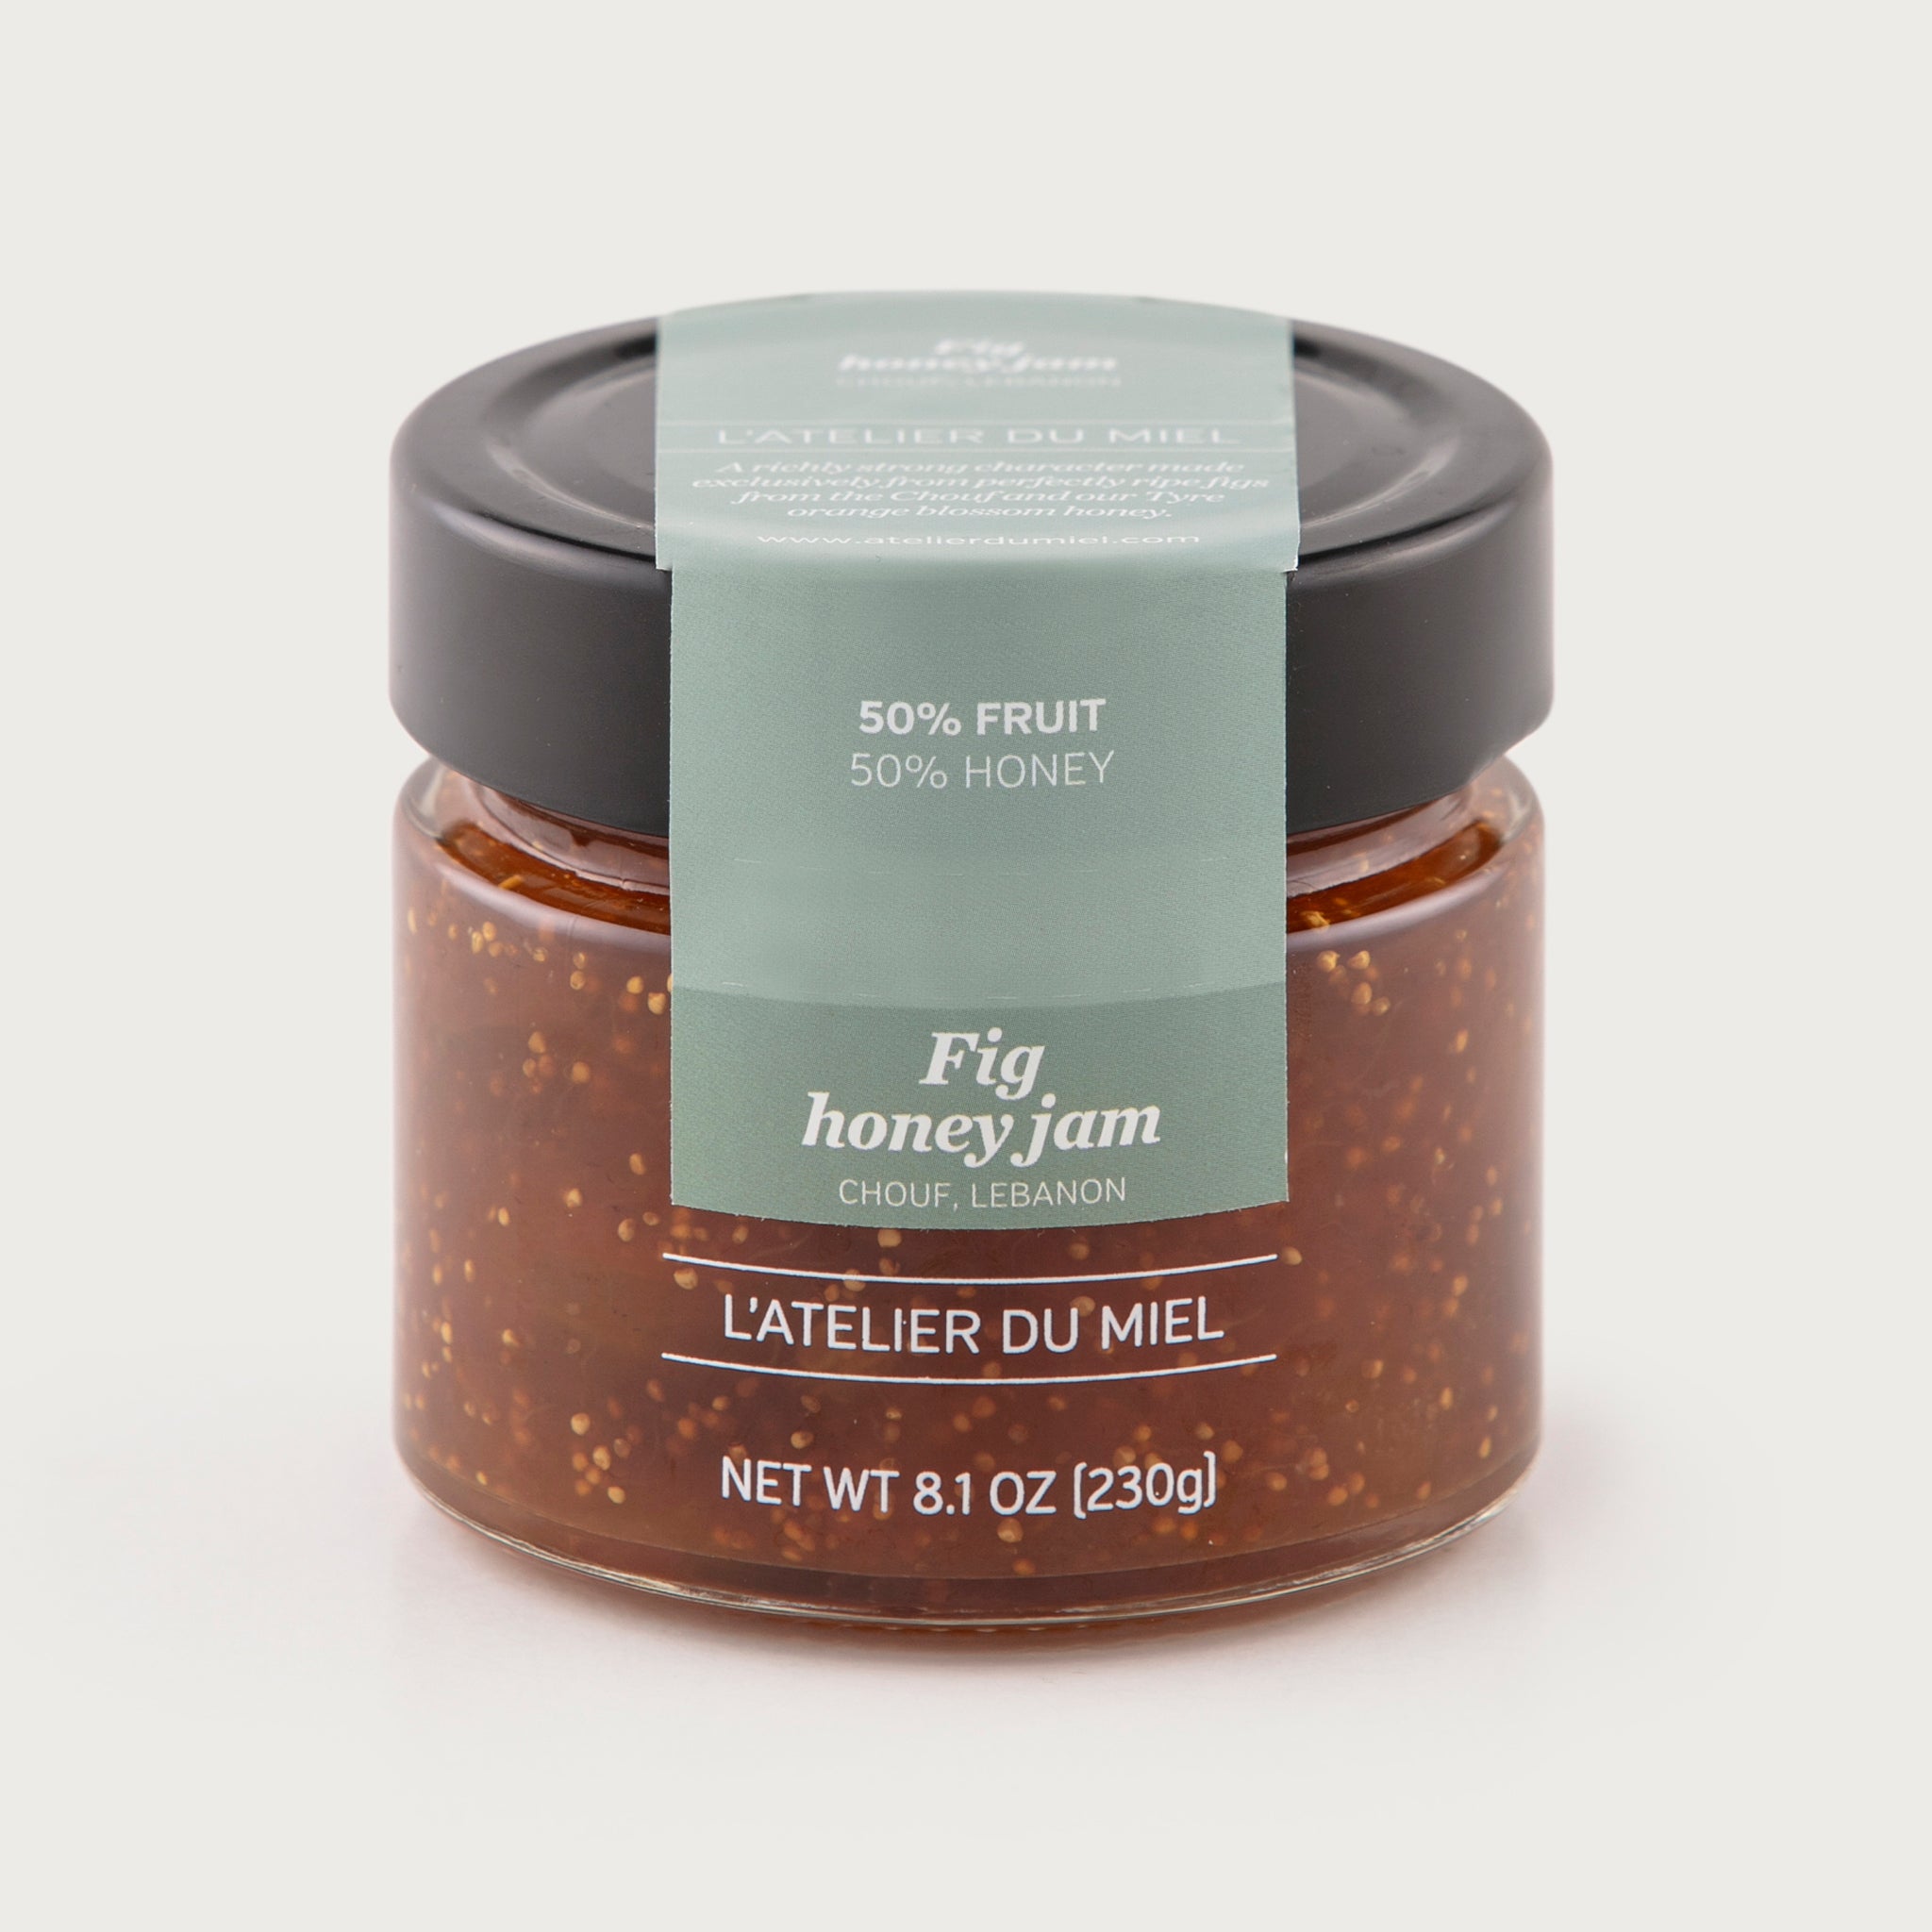 A jar of Lebanese fig honey jam by L'Atelier du Miel